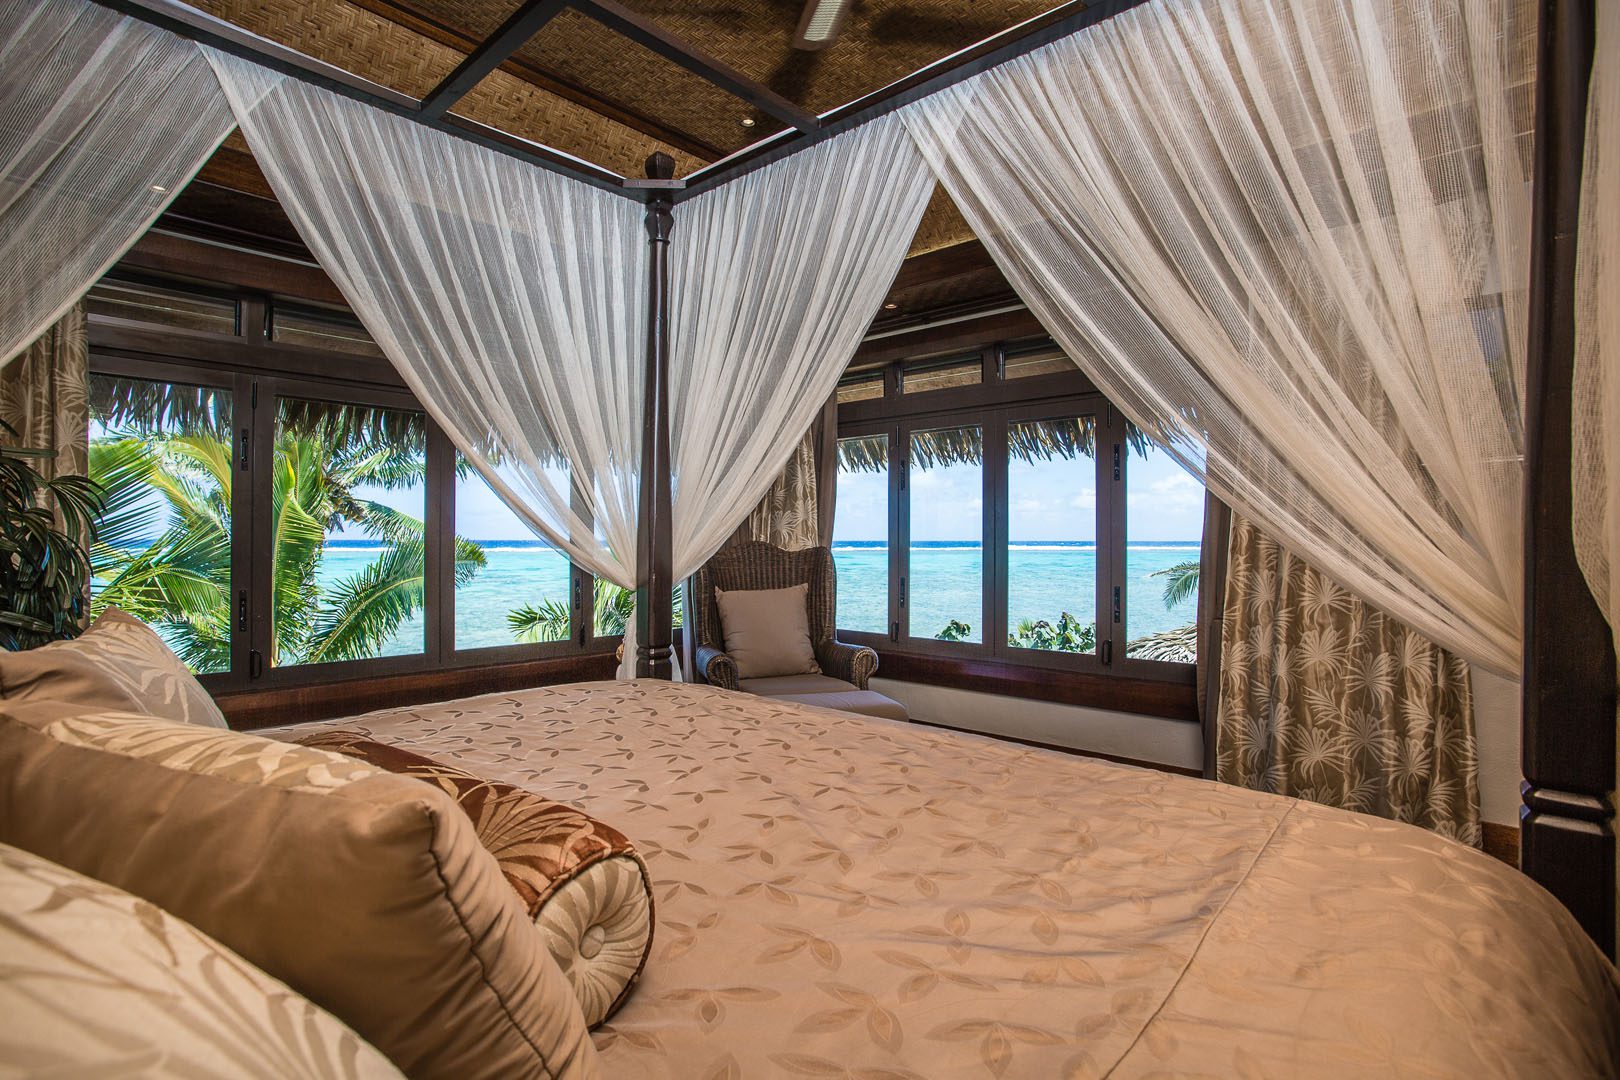 View of the elegant Presidential Beachfront Villa Bedroom overlooking the lagoon view